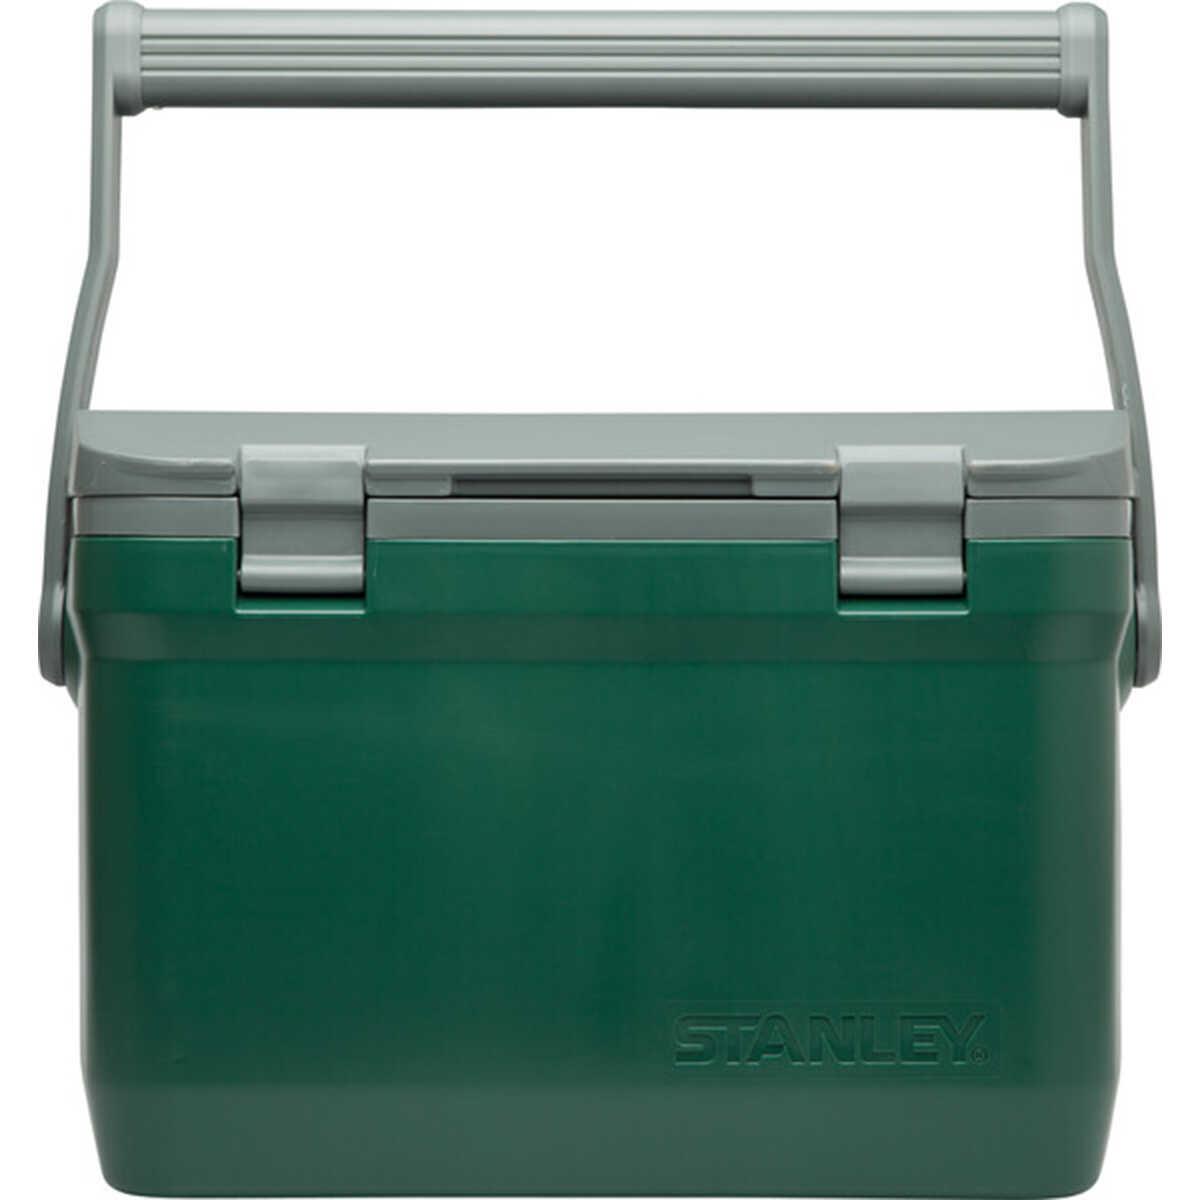 Stanley Adventure Green Portable Icebox 15.1 Lt 3